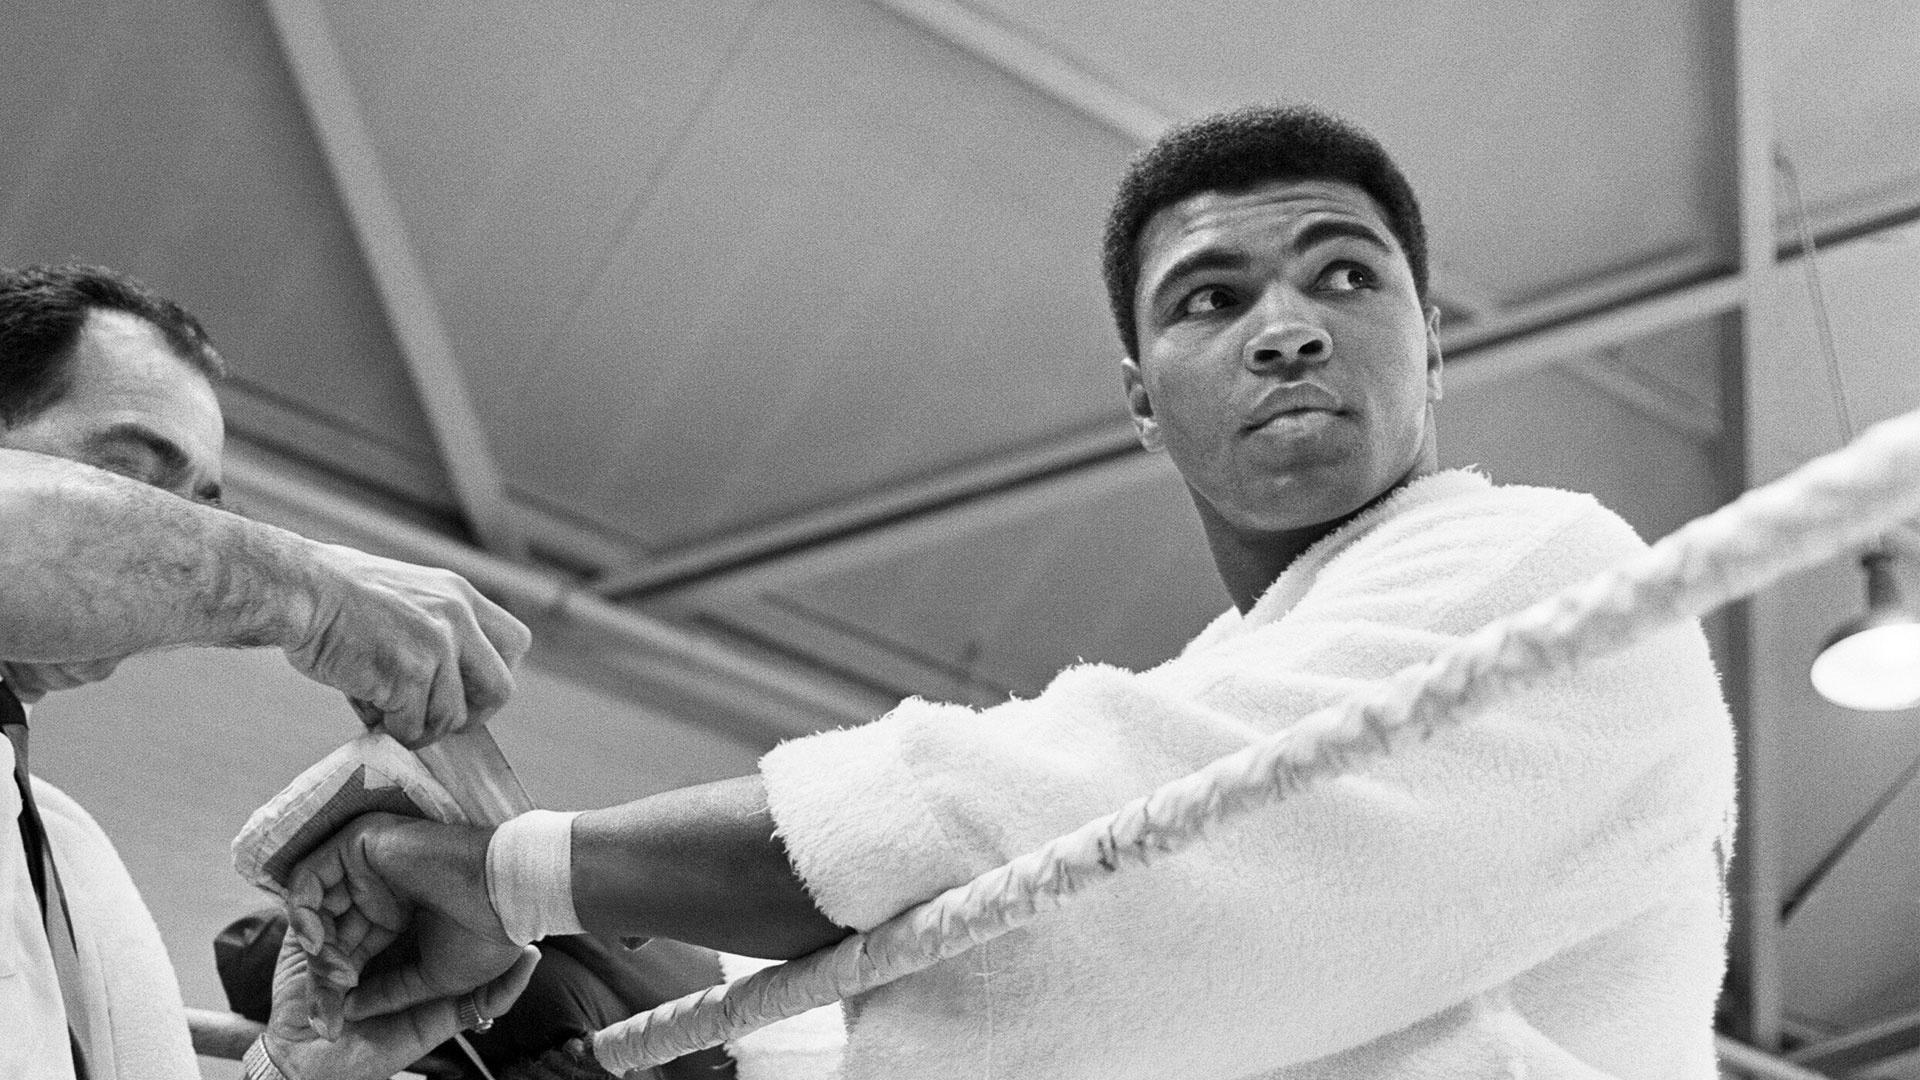 Muhammad Ali - Quick hands, quick feet, can't lose